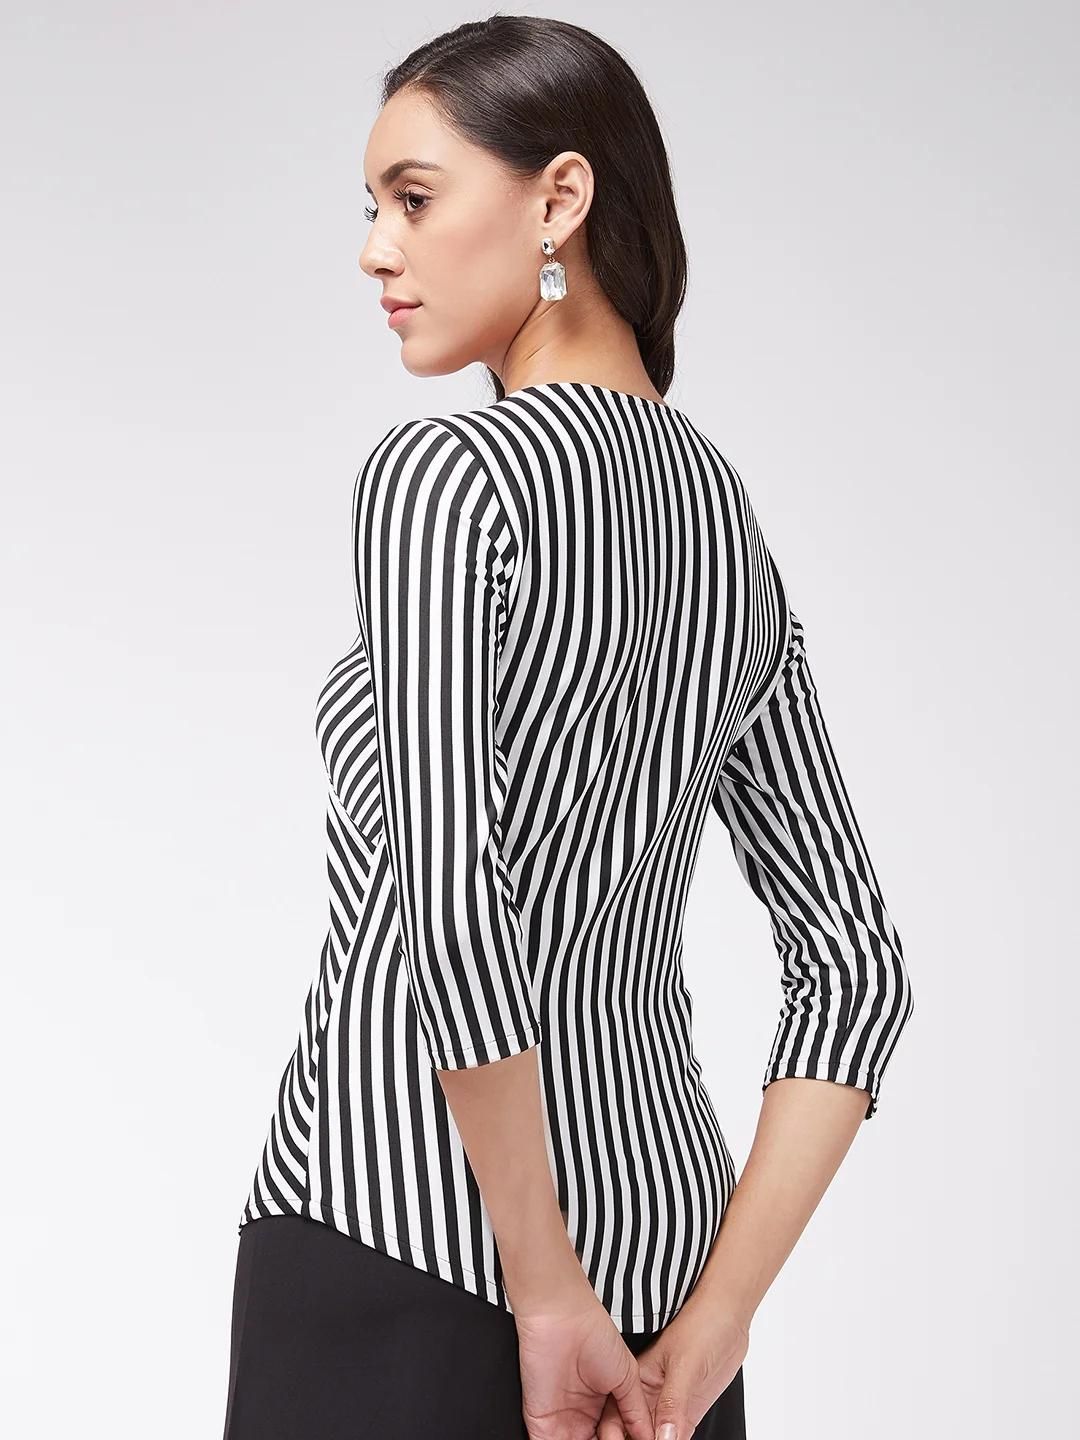 PANNKH Monocromatic Black & White Stripe Overlap Top